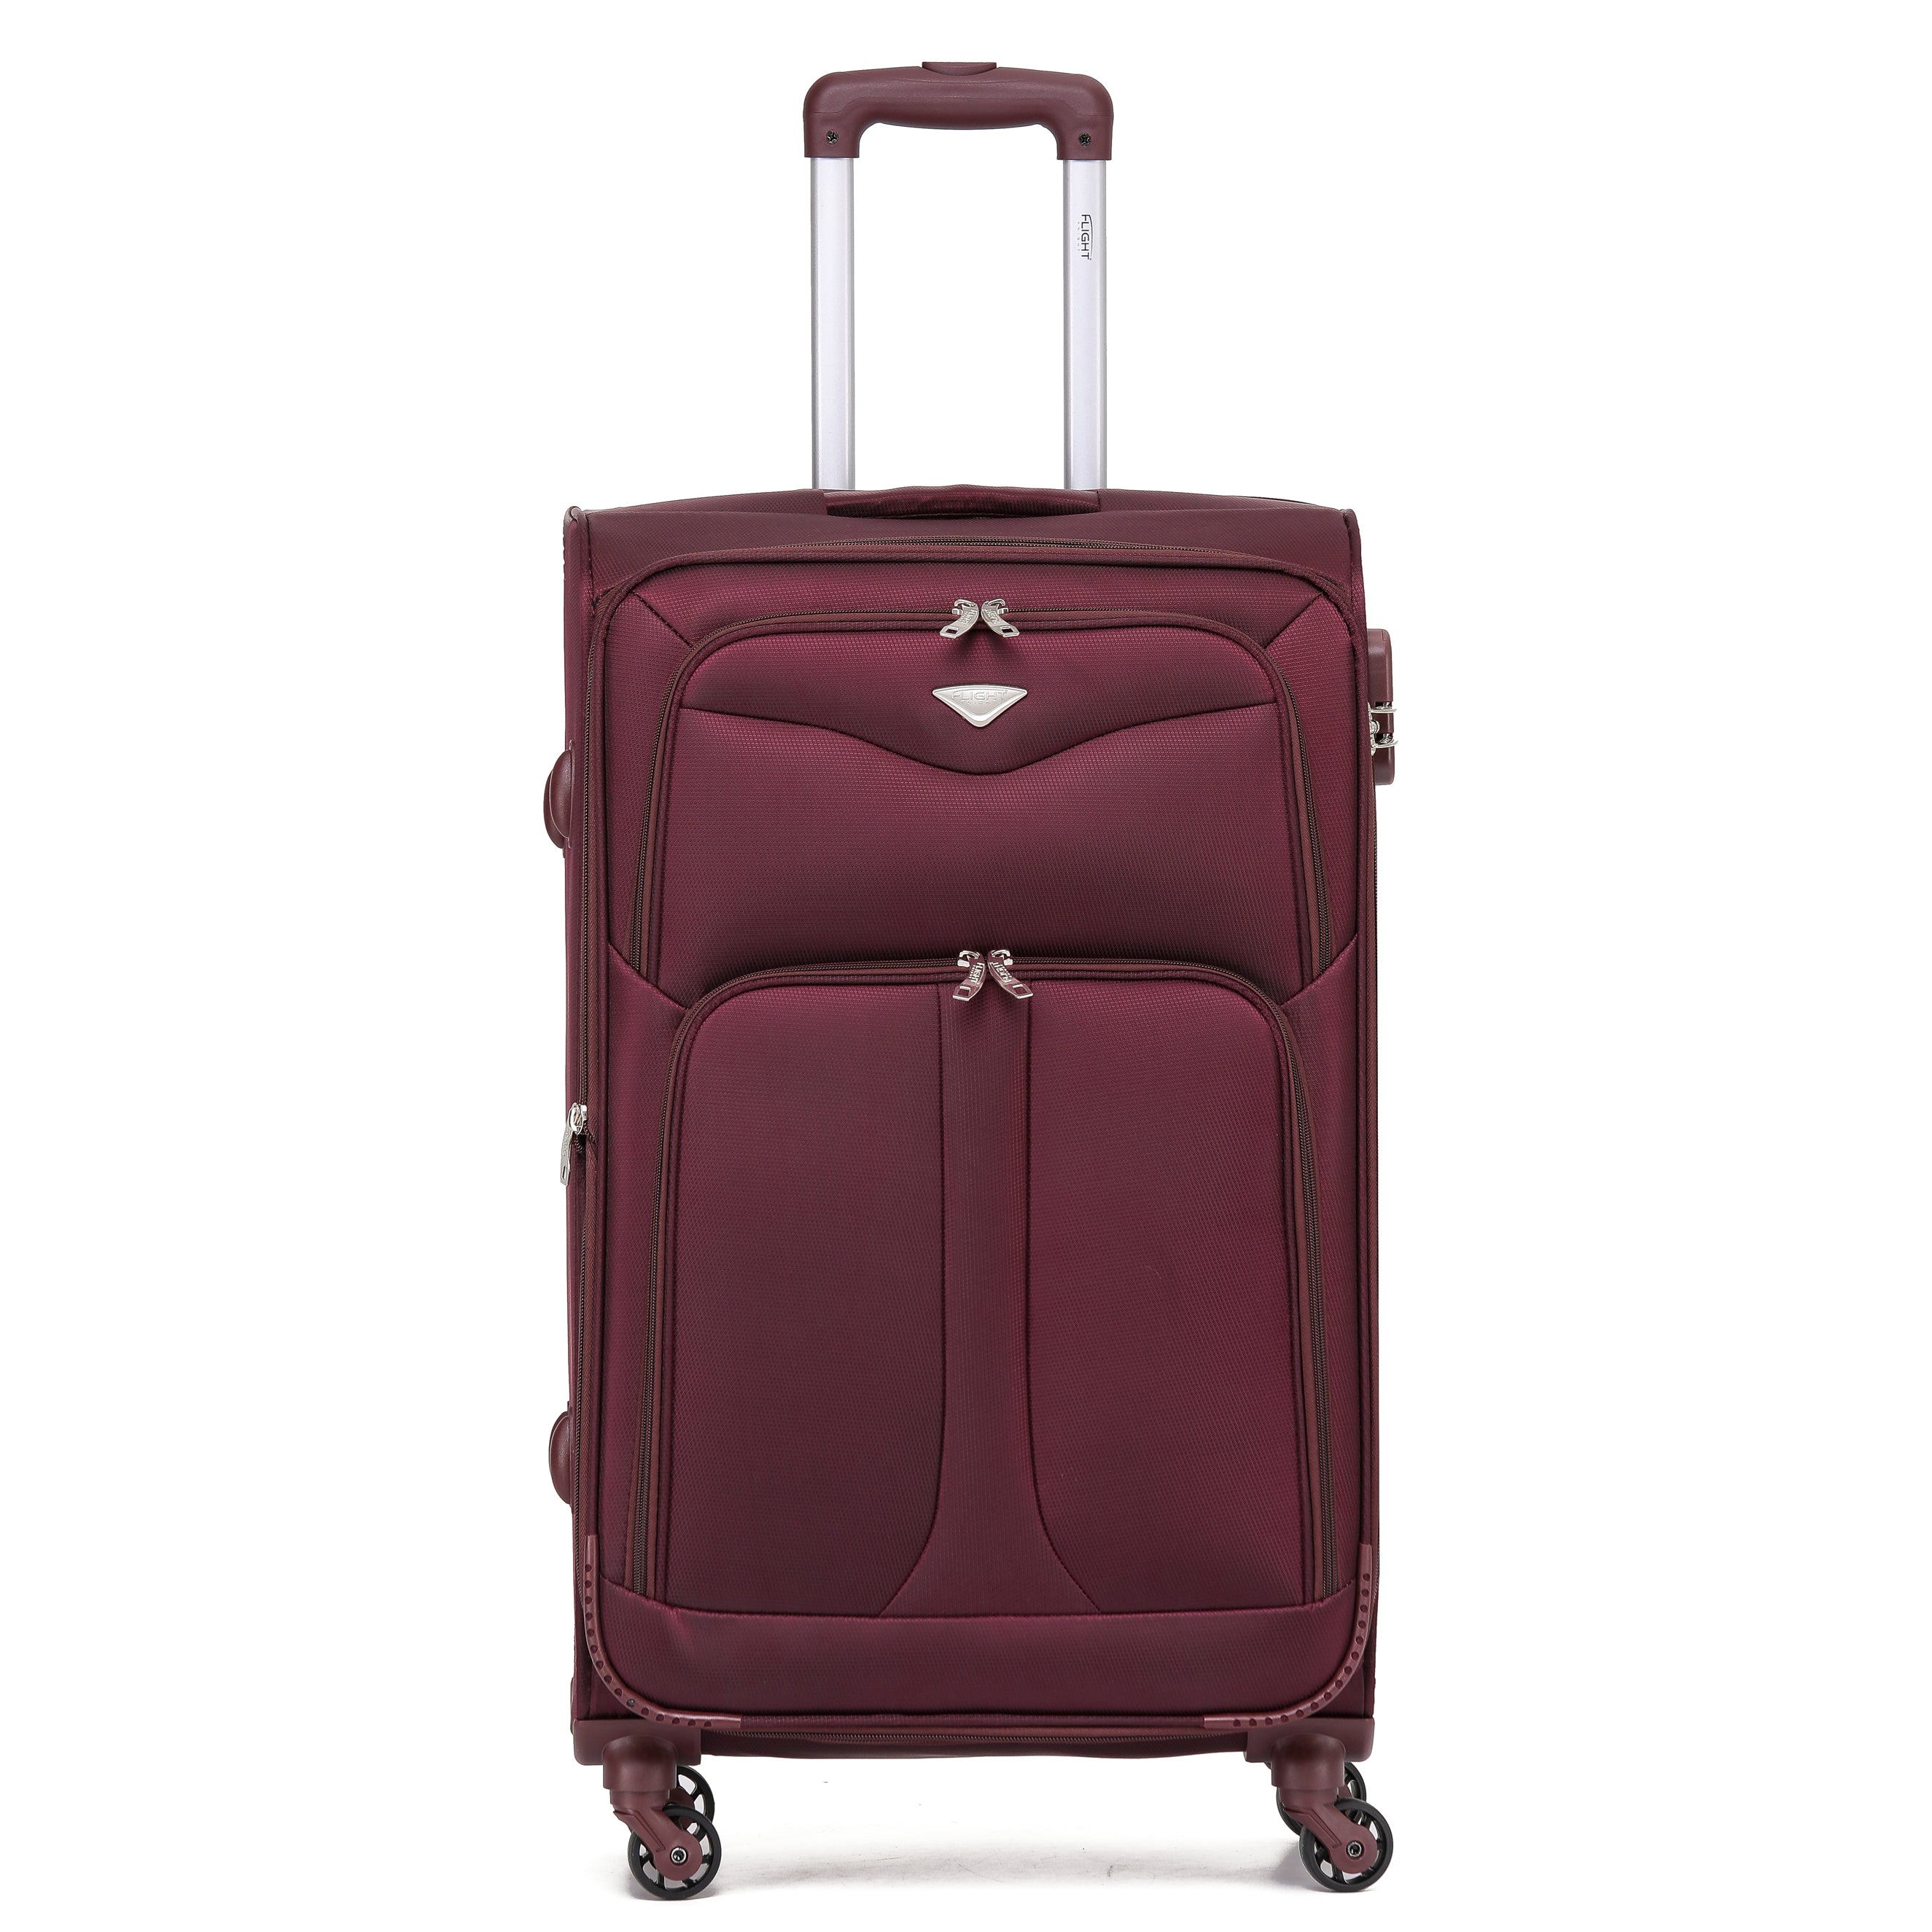 Lightweight 4 Wheel Soft Case Suitcases